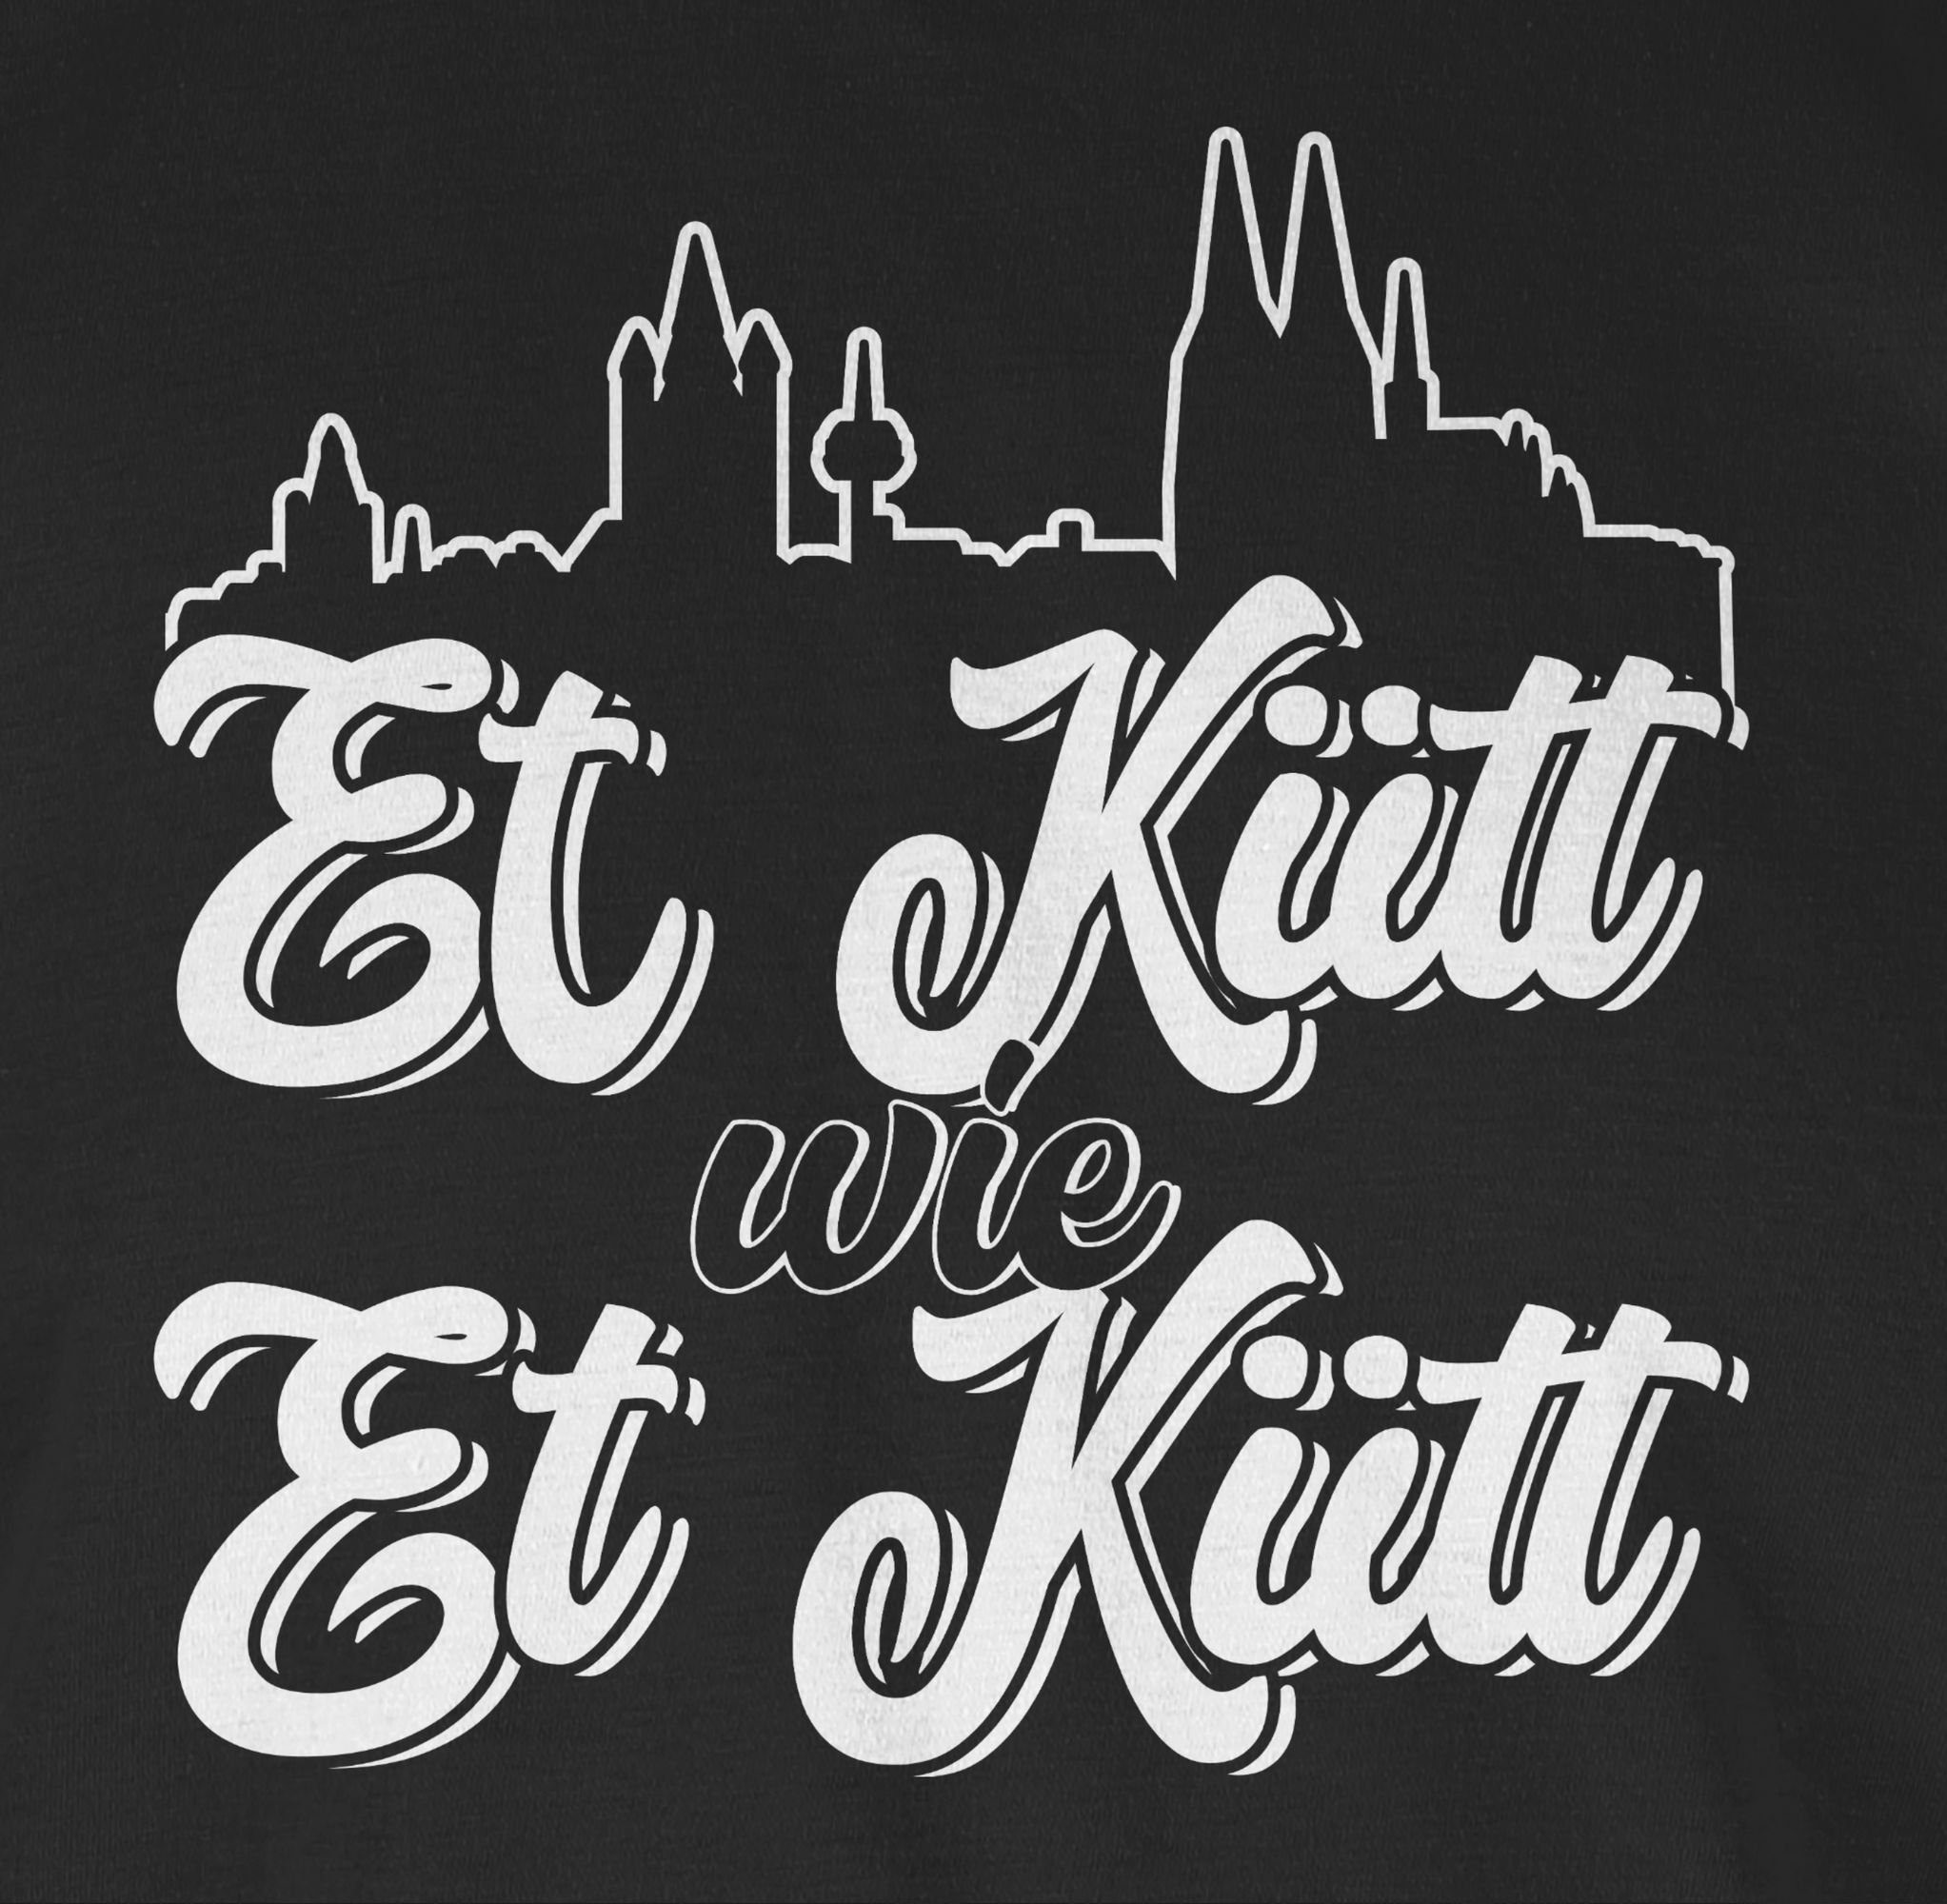 Kütt Karneval Et Wie 02 Shirtracer Outfit T-Shirt Kütt Schwarz Et